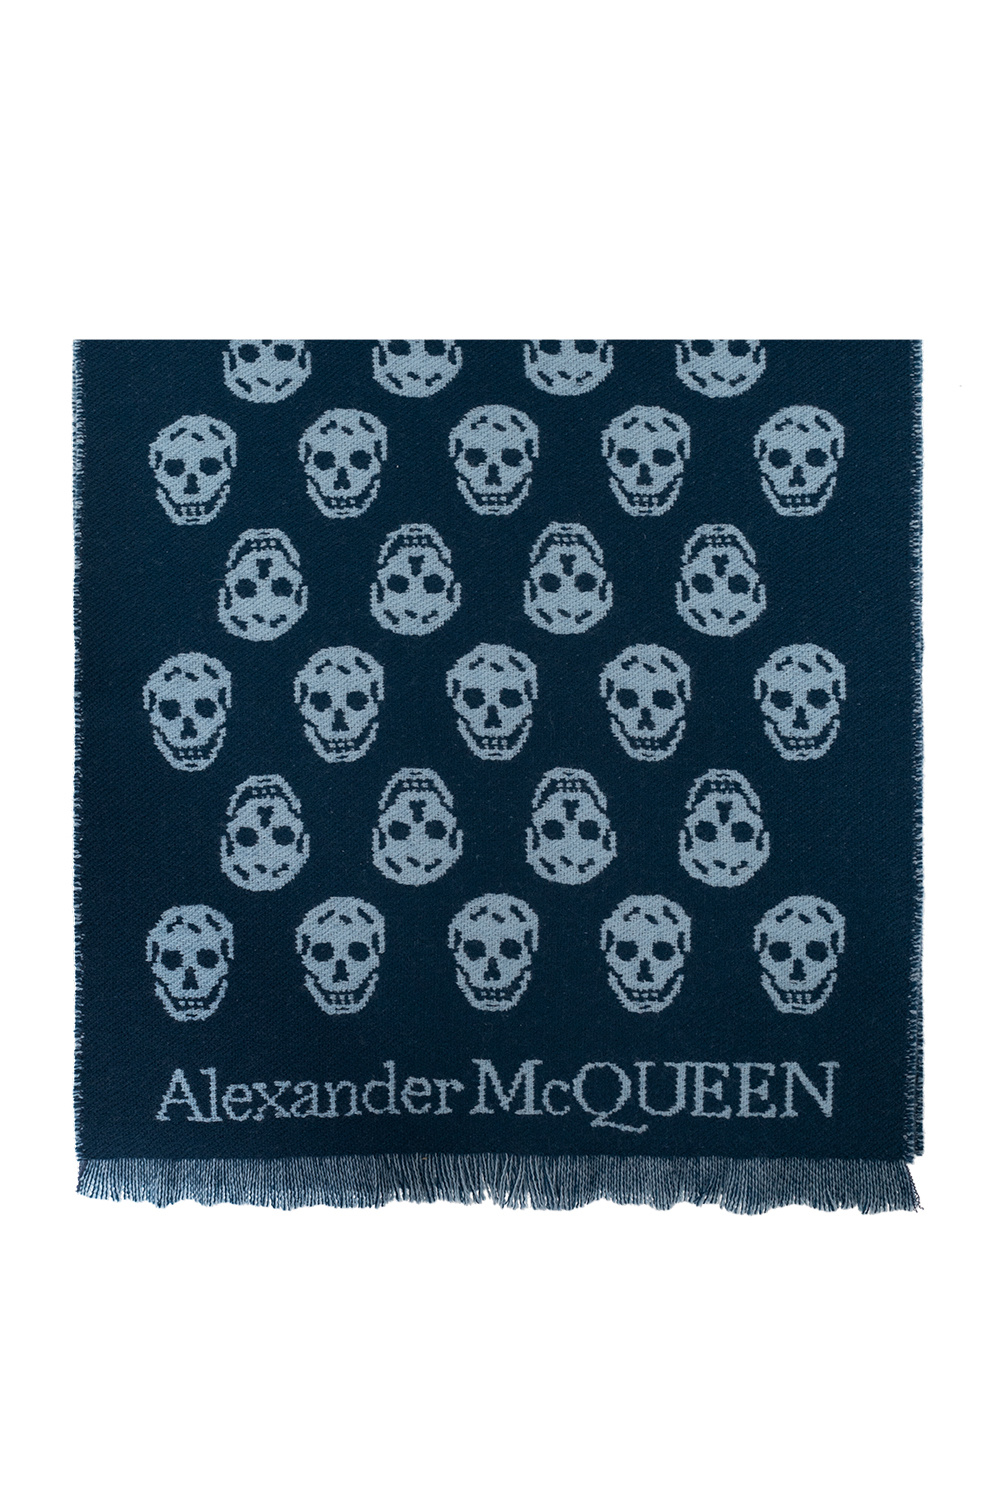 Alexander McQueen Alexander McQueen quilted phone case on chain